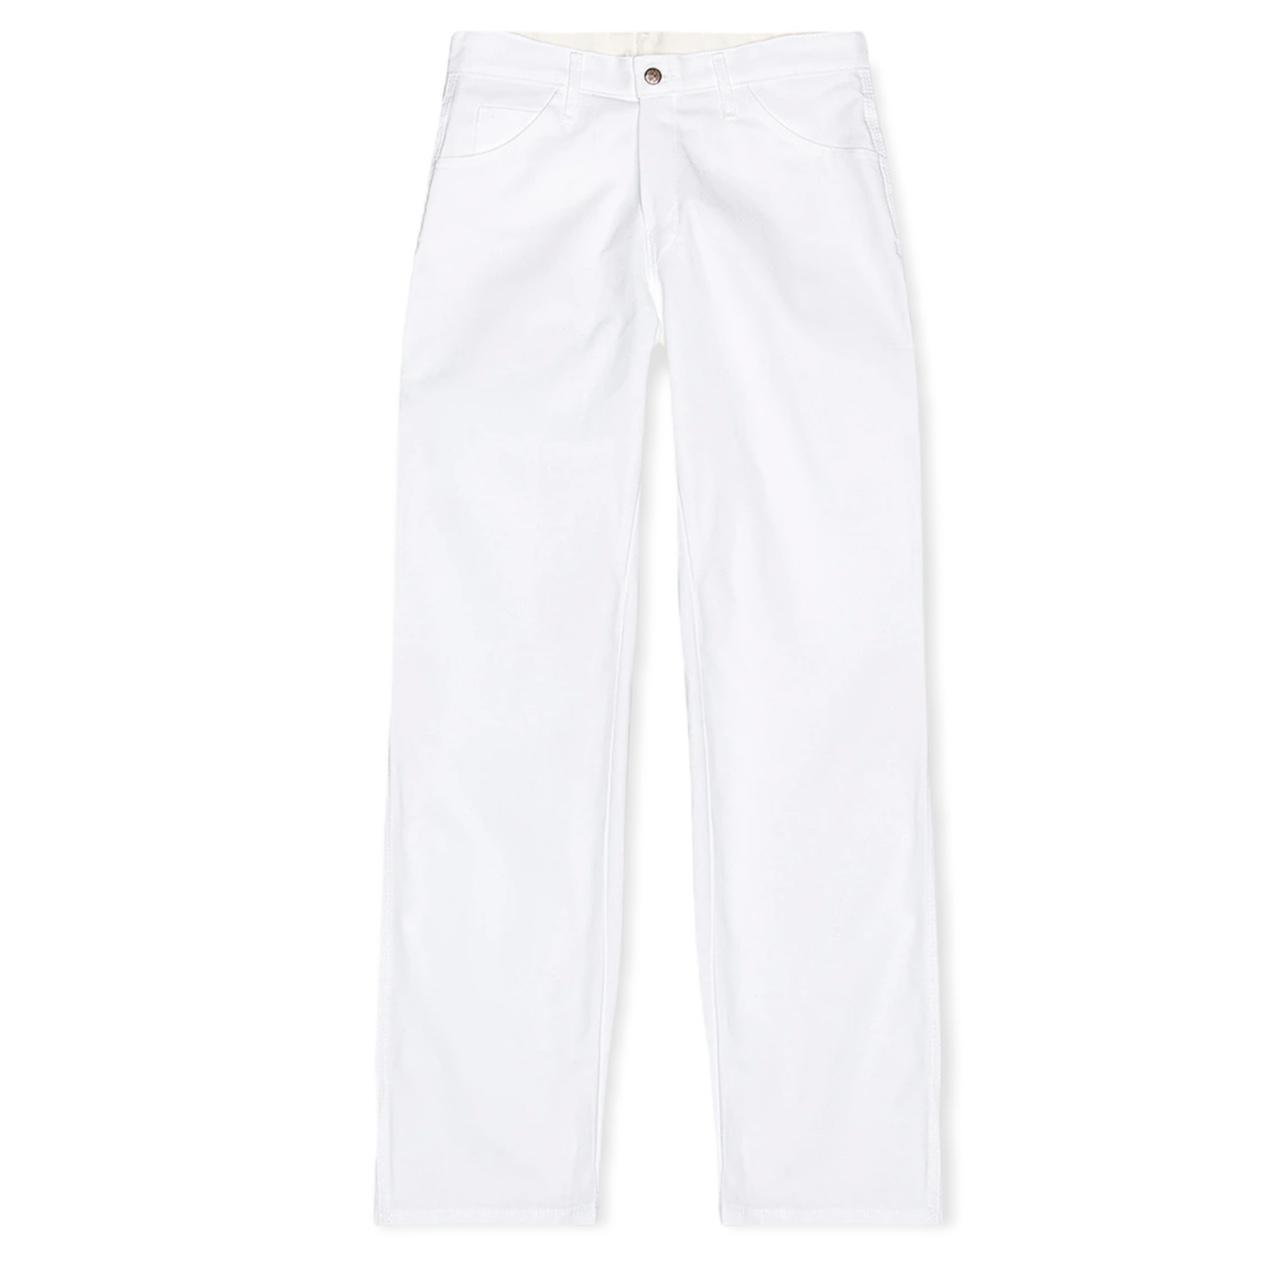 Dickies Men's White Trousers